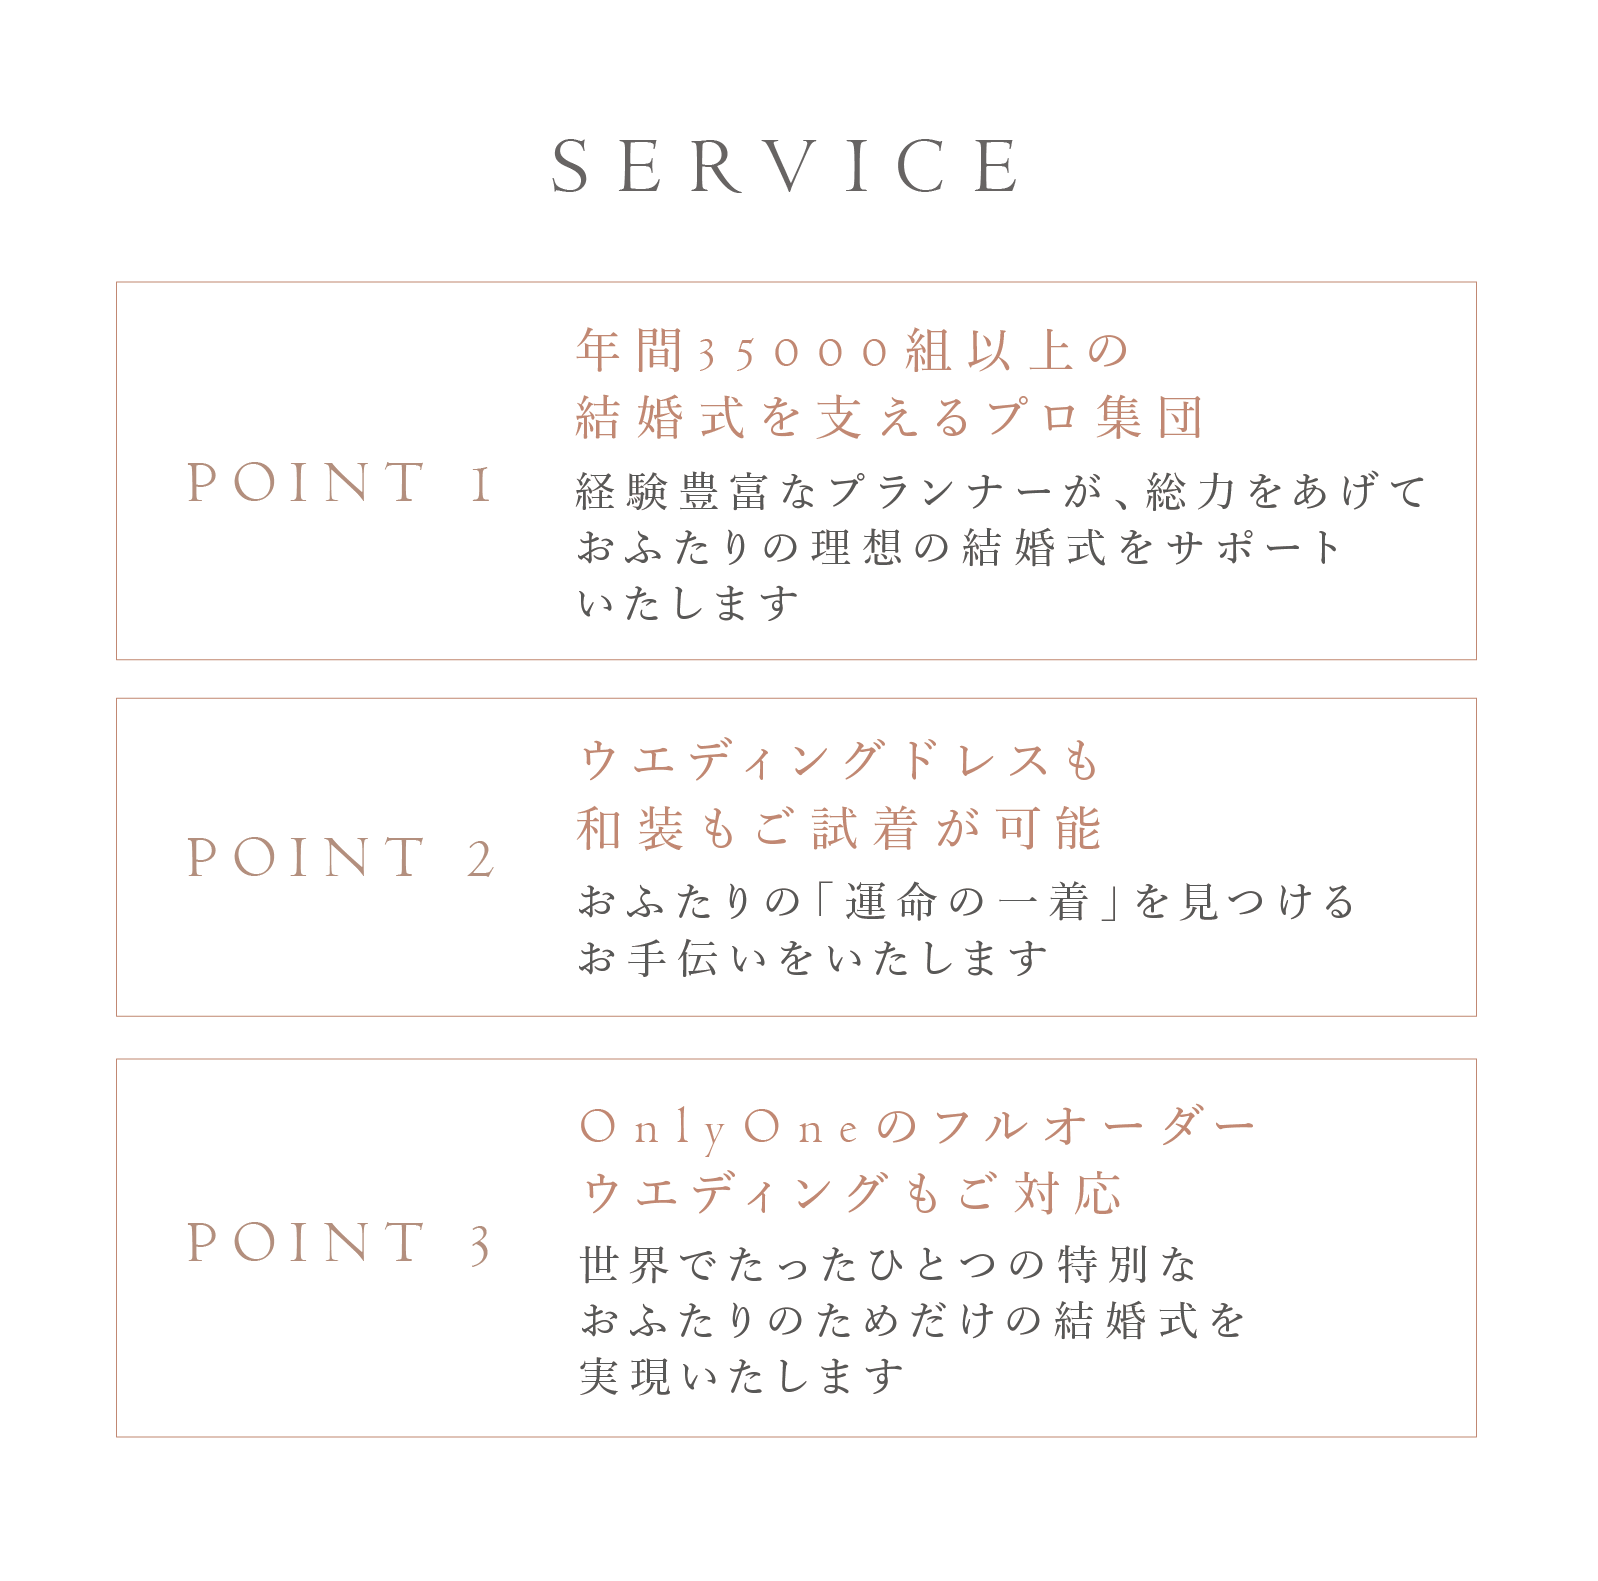 TAKAMI BRIDAL WEDDING DESK OSAKAのサービスの特徴 スマートフォン用の画像